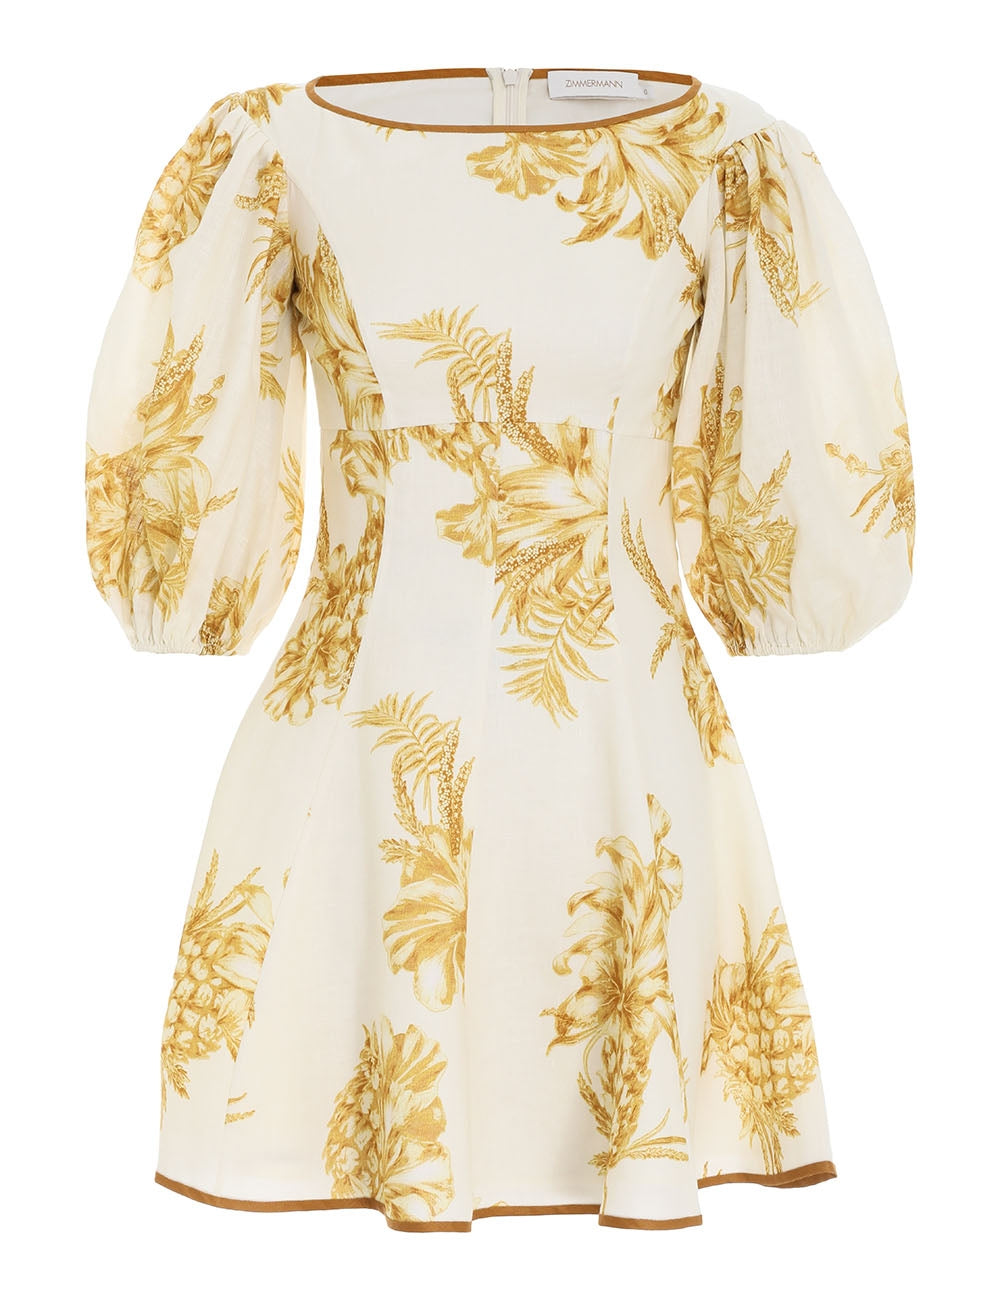 Rent Zimmermann Empire Mini Dress (Cream Gold) - Rent $119 | Dress for ...